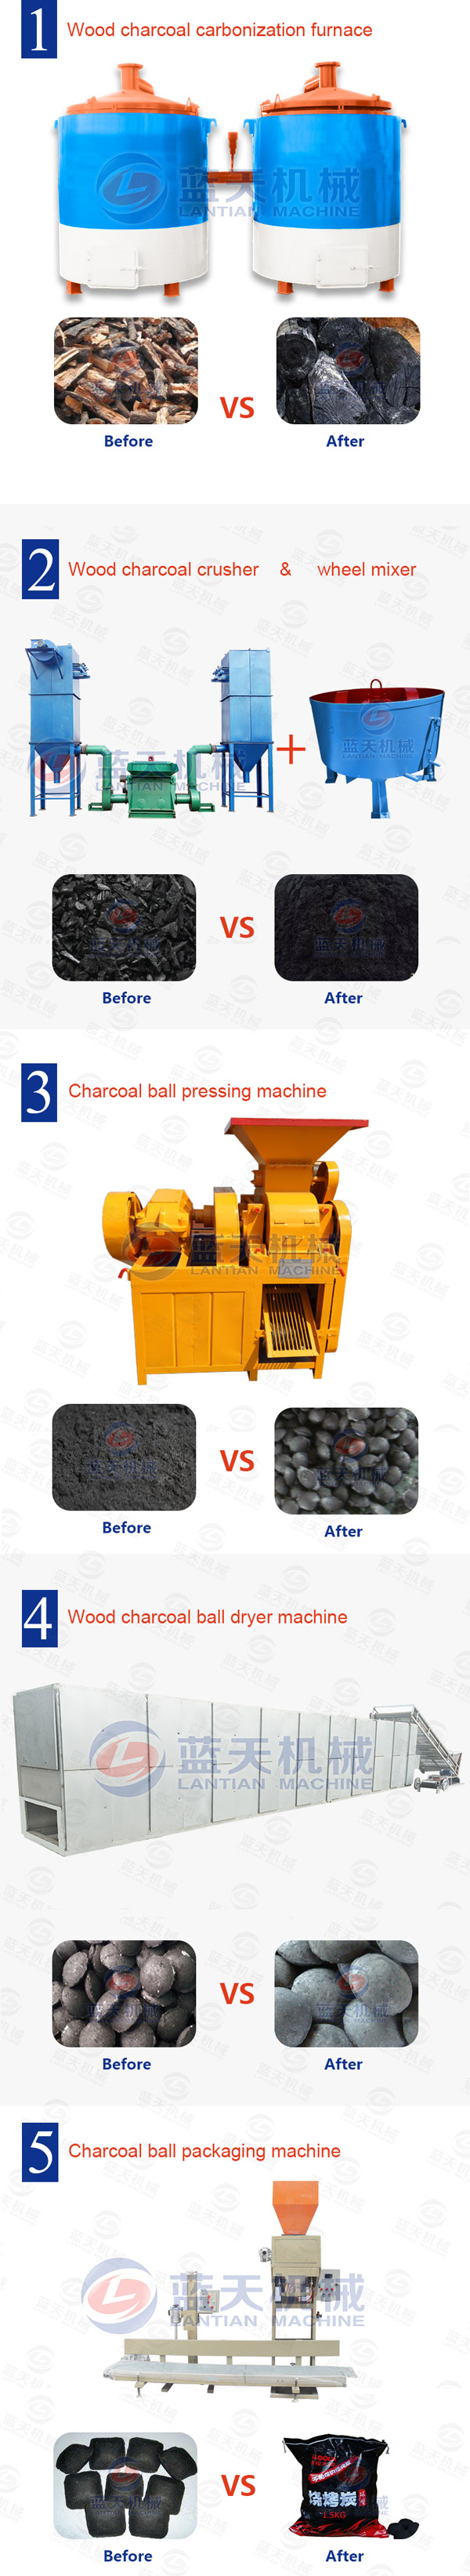 Charcoal Ball Pressing Machine